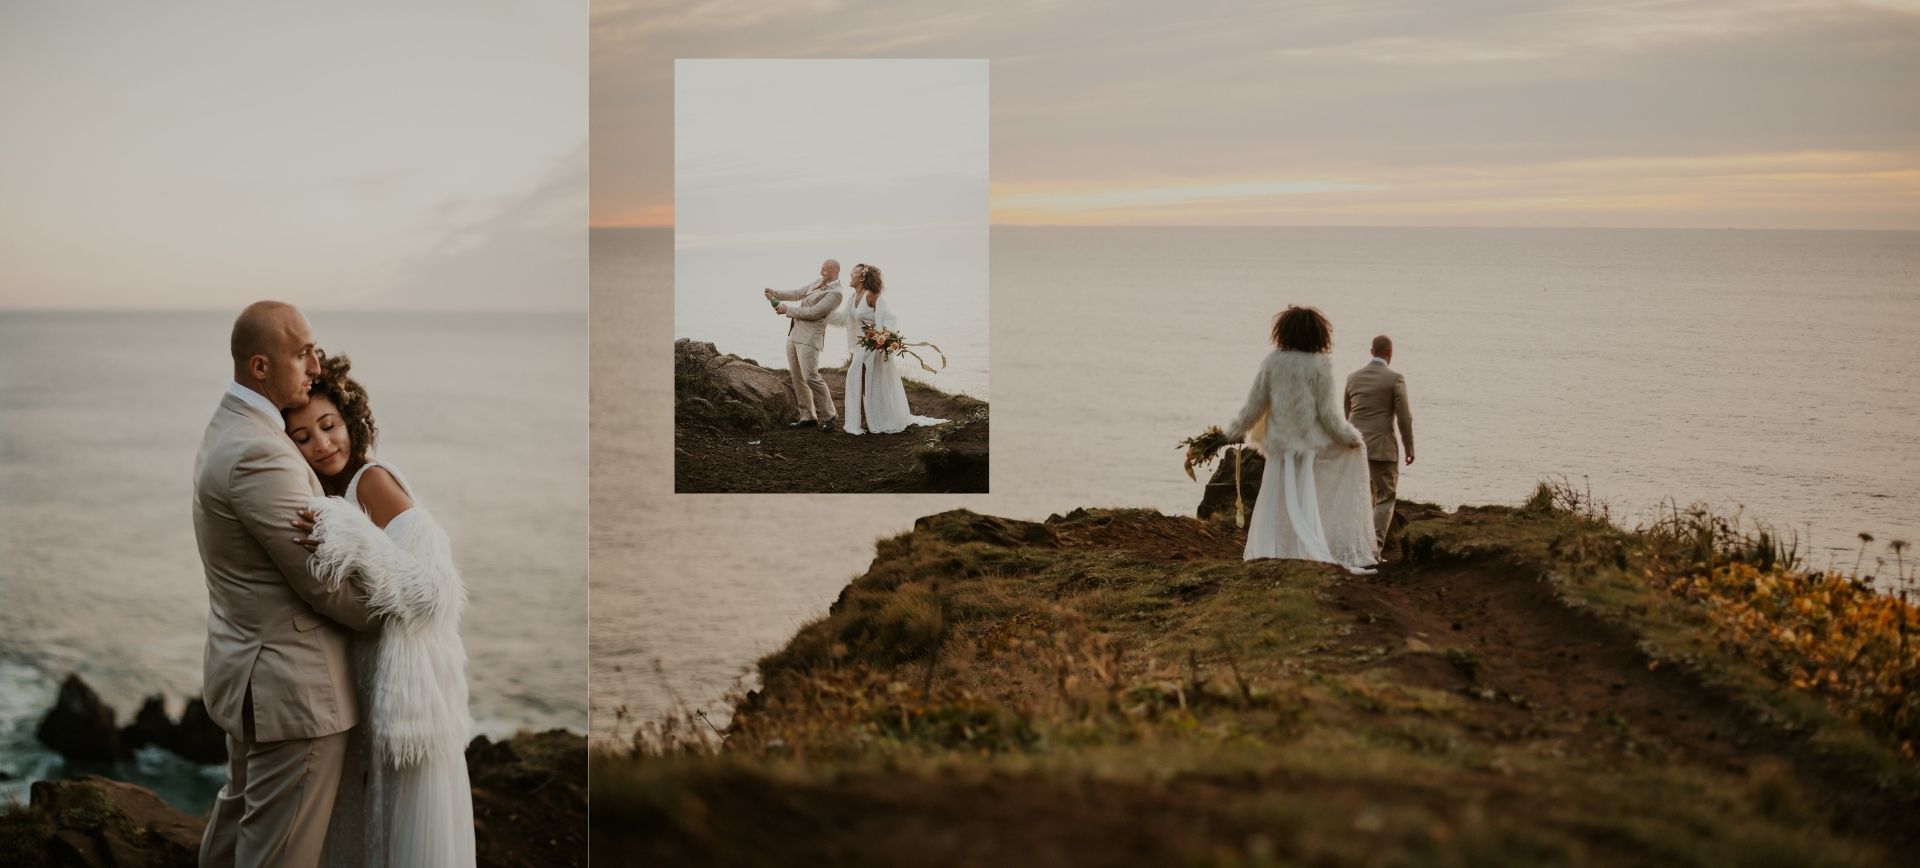 oregon adventure wedding - bride and groom during coast elopement in oregon